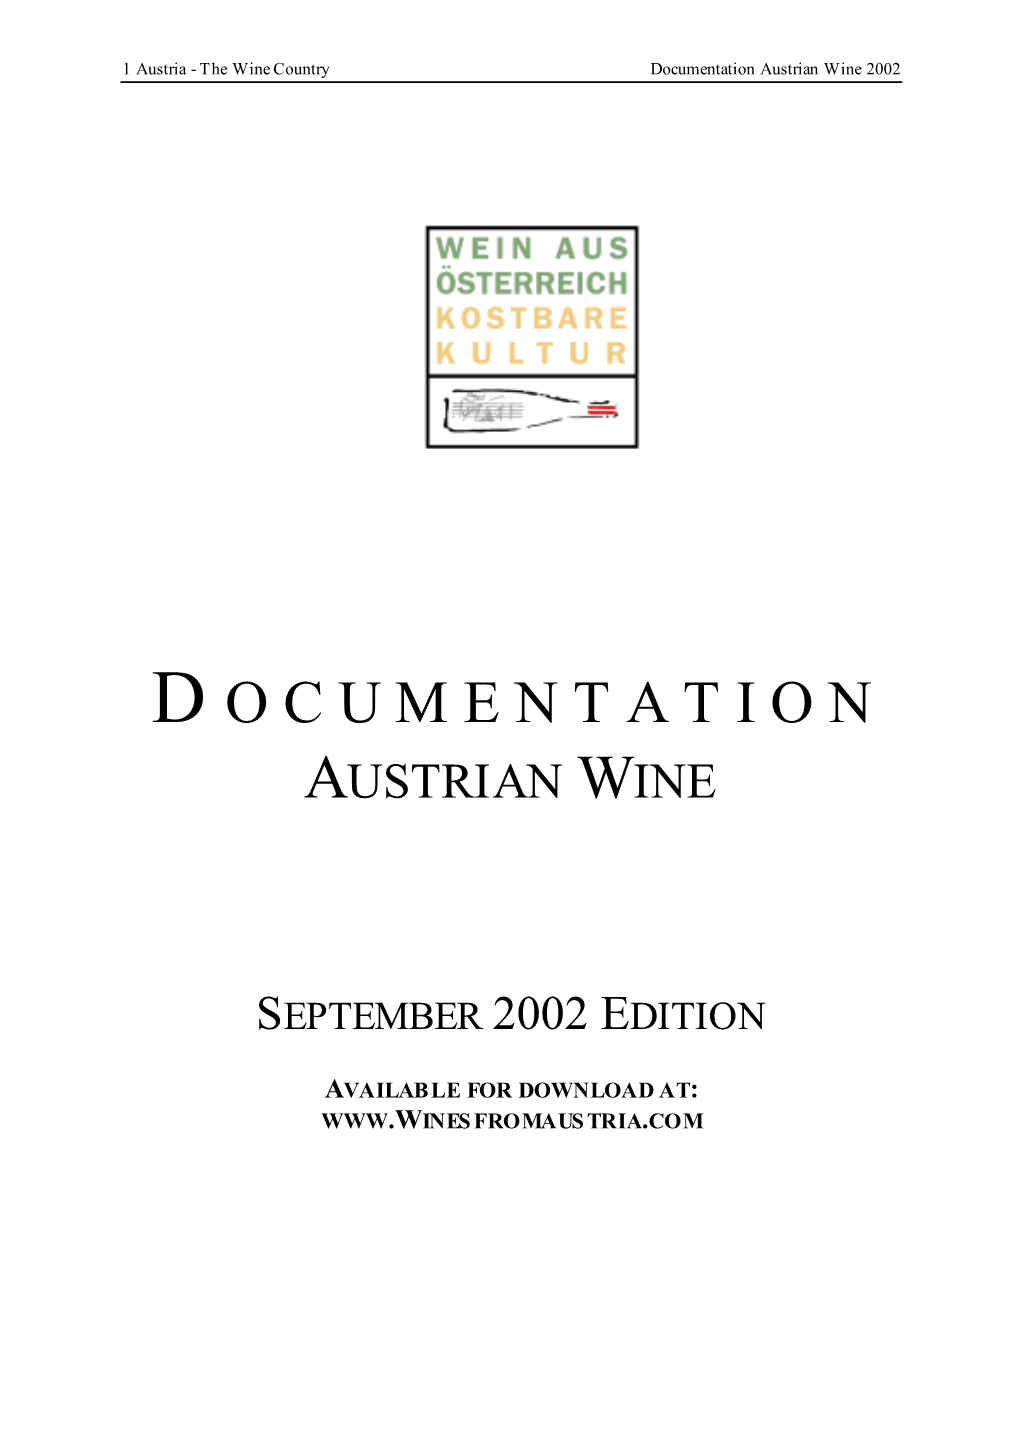 The Wine Country Documentation Austrian Wine 2002